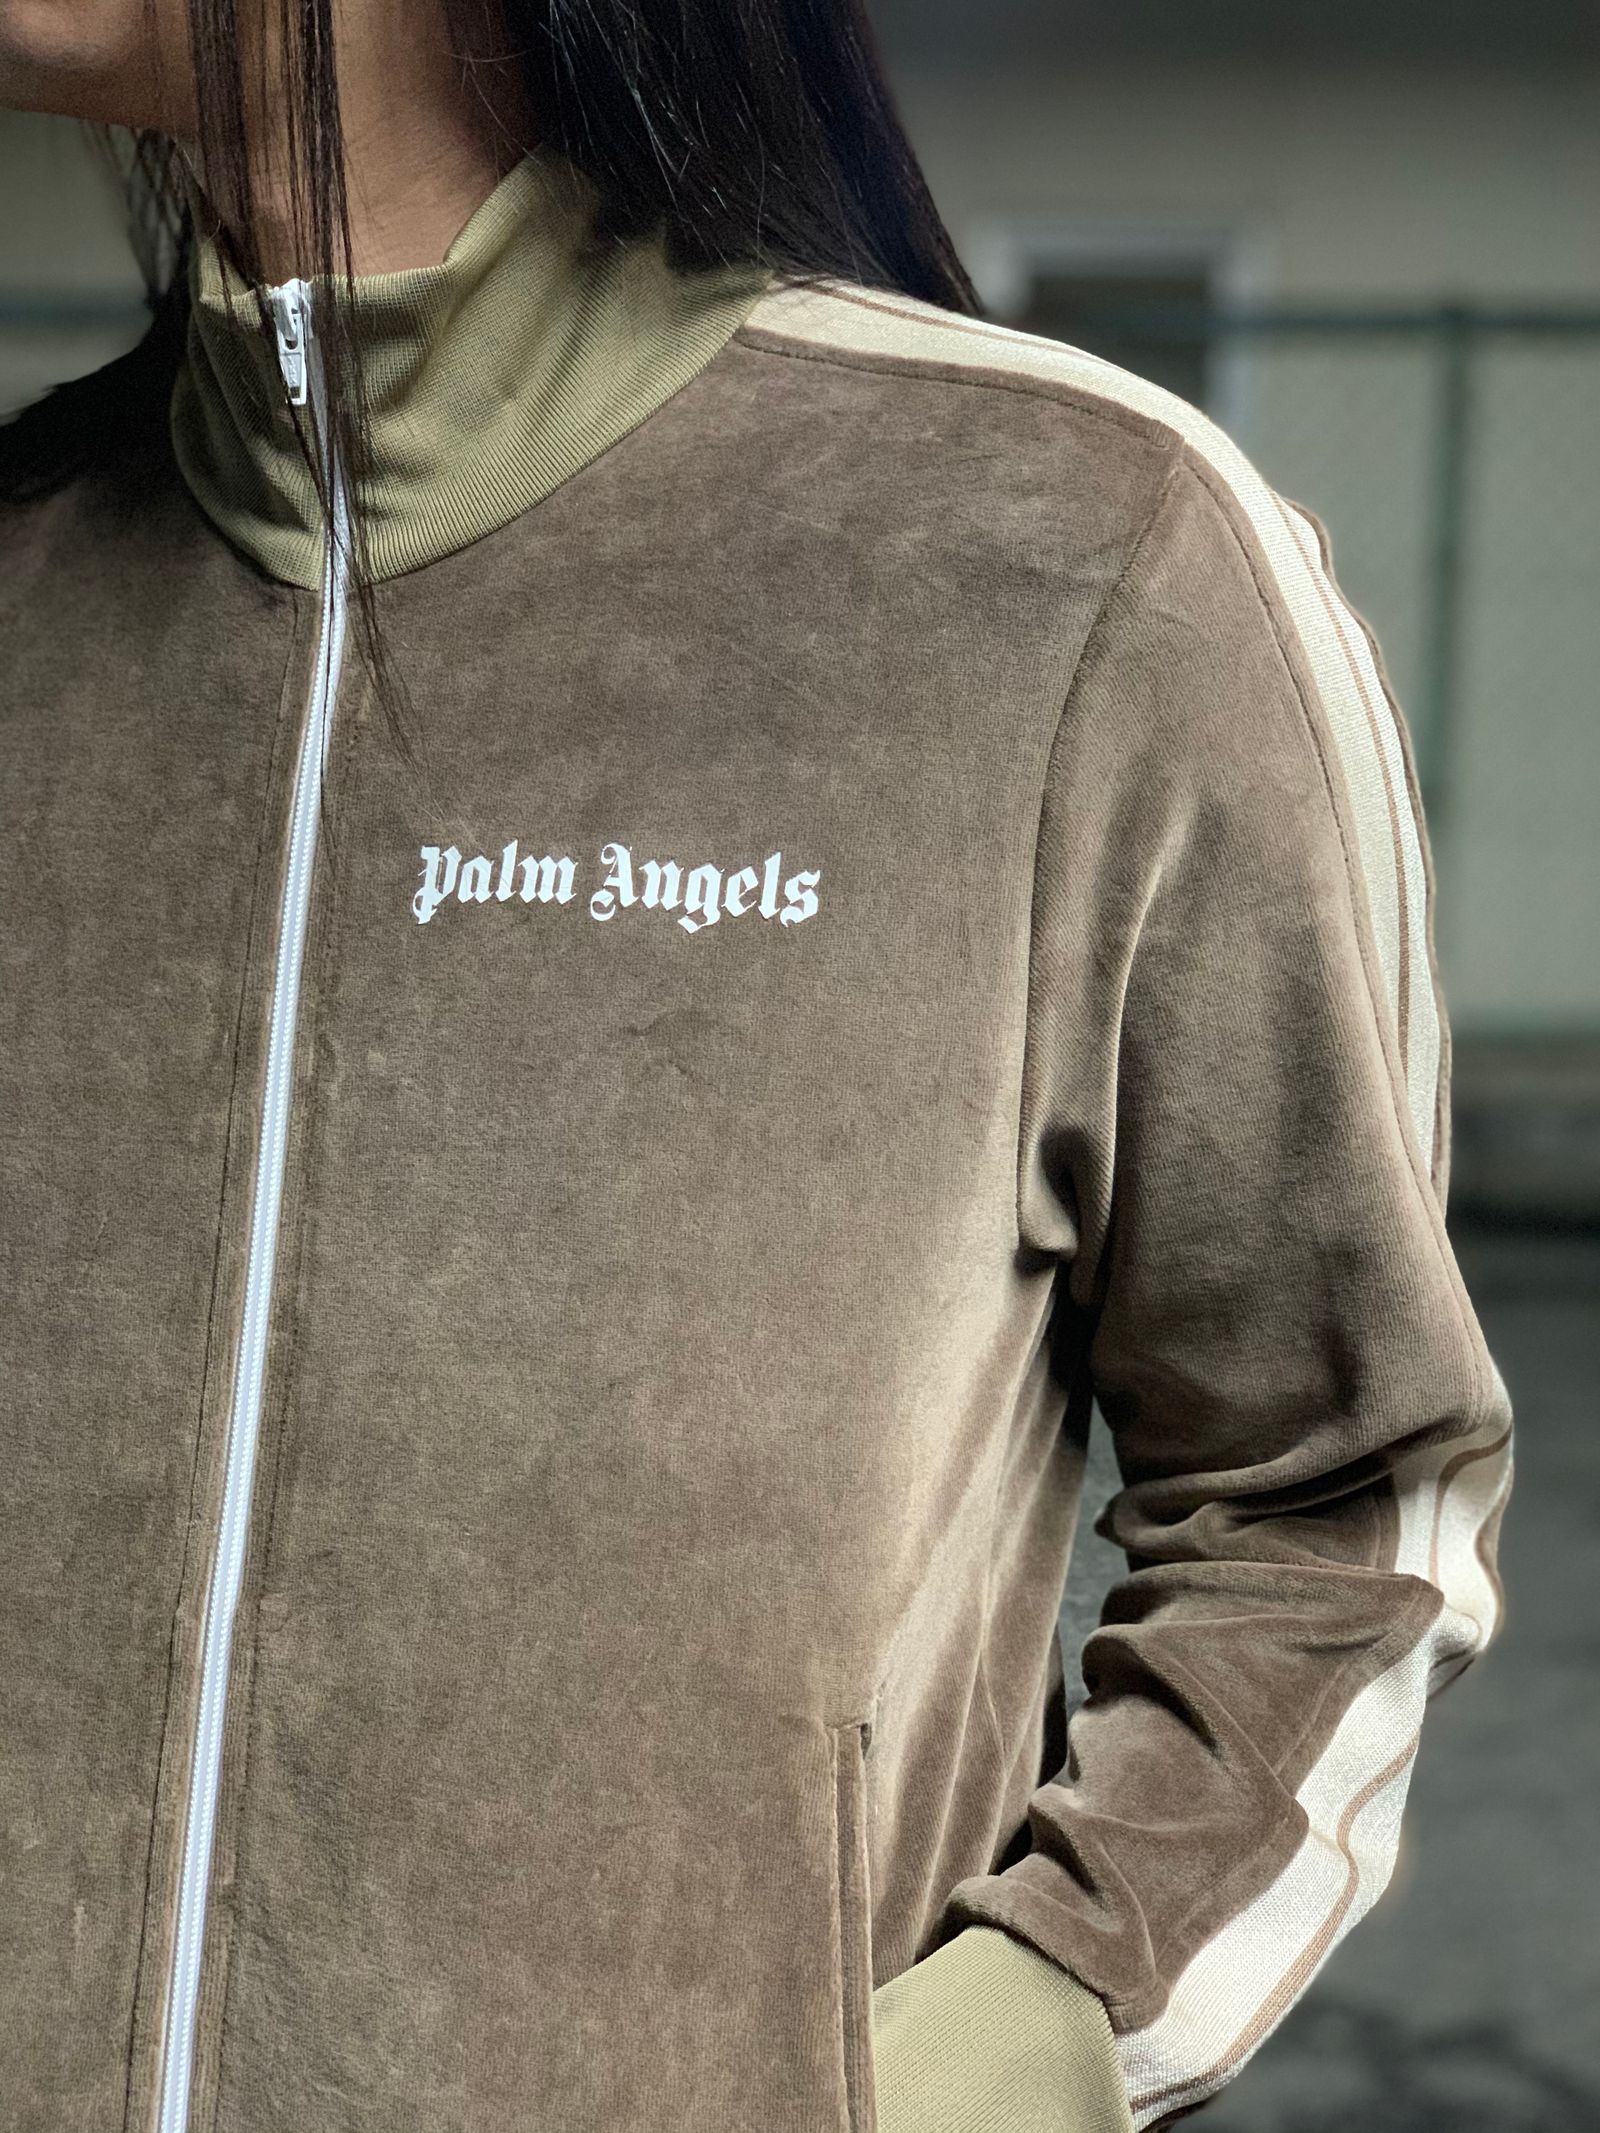 PALM ANGELS - ベロアトラックパンツ / CHENILLE TRACK PANTS 